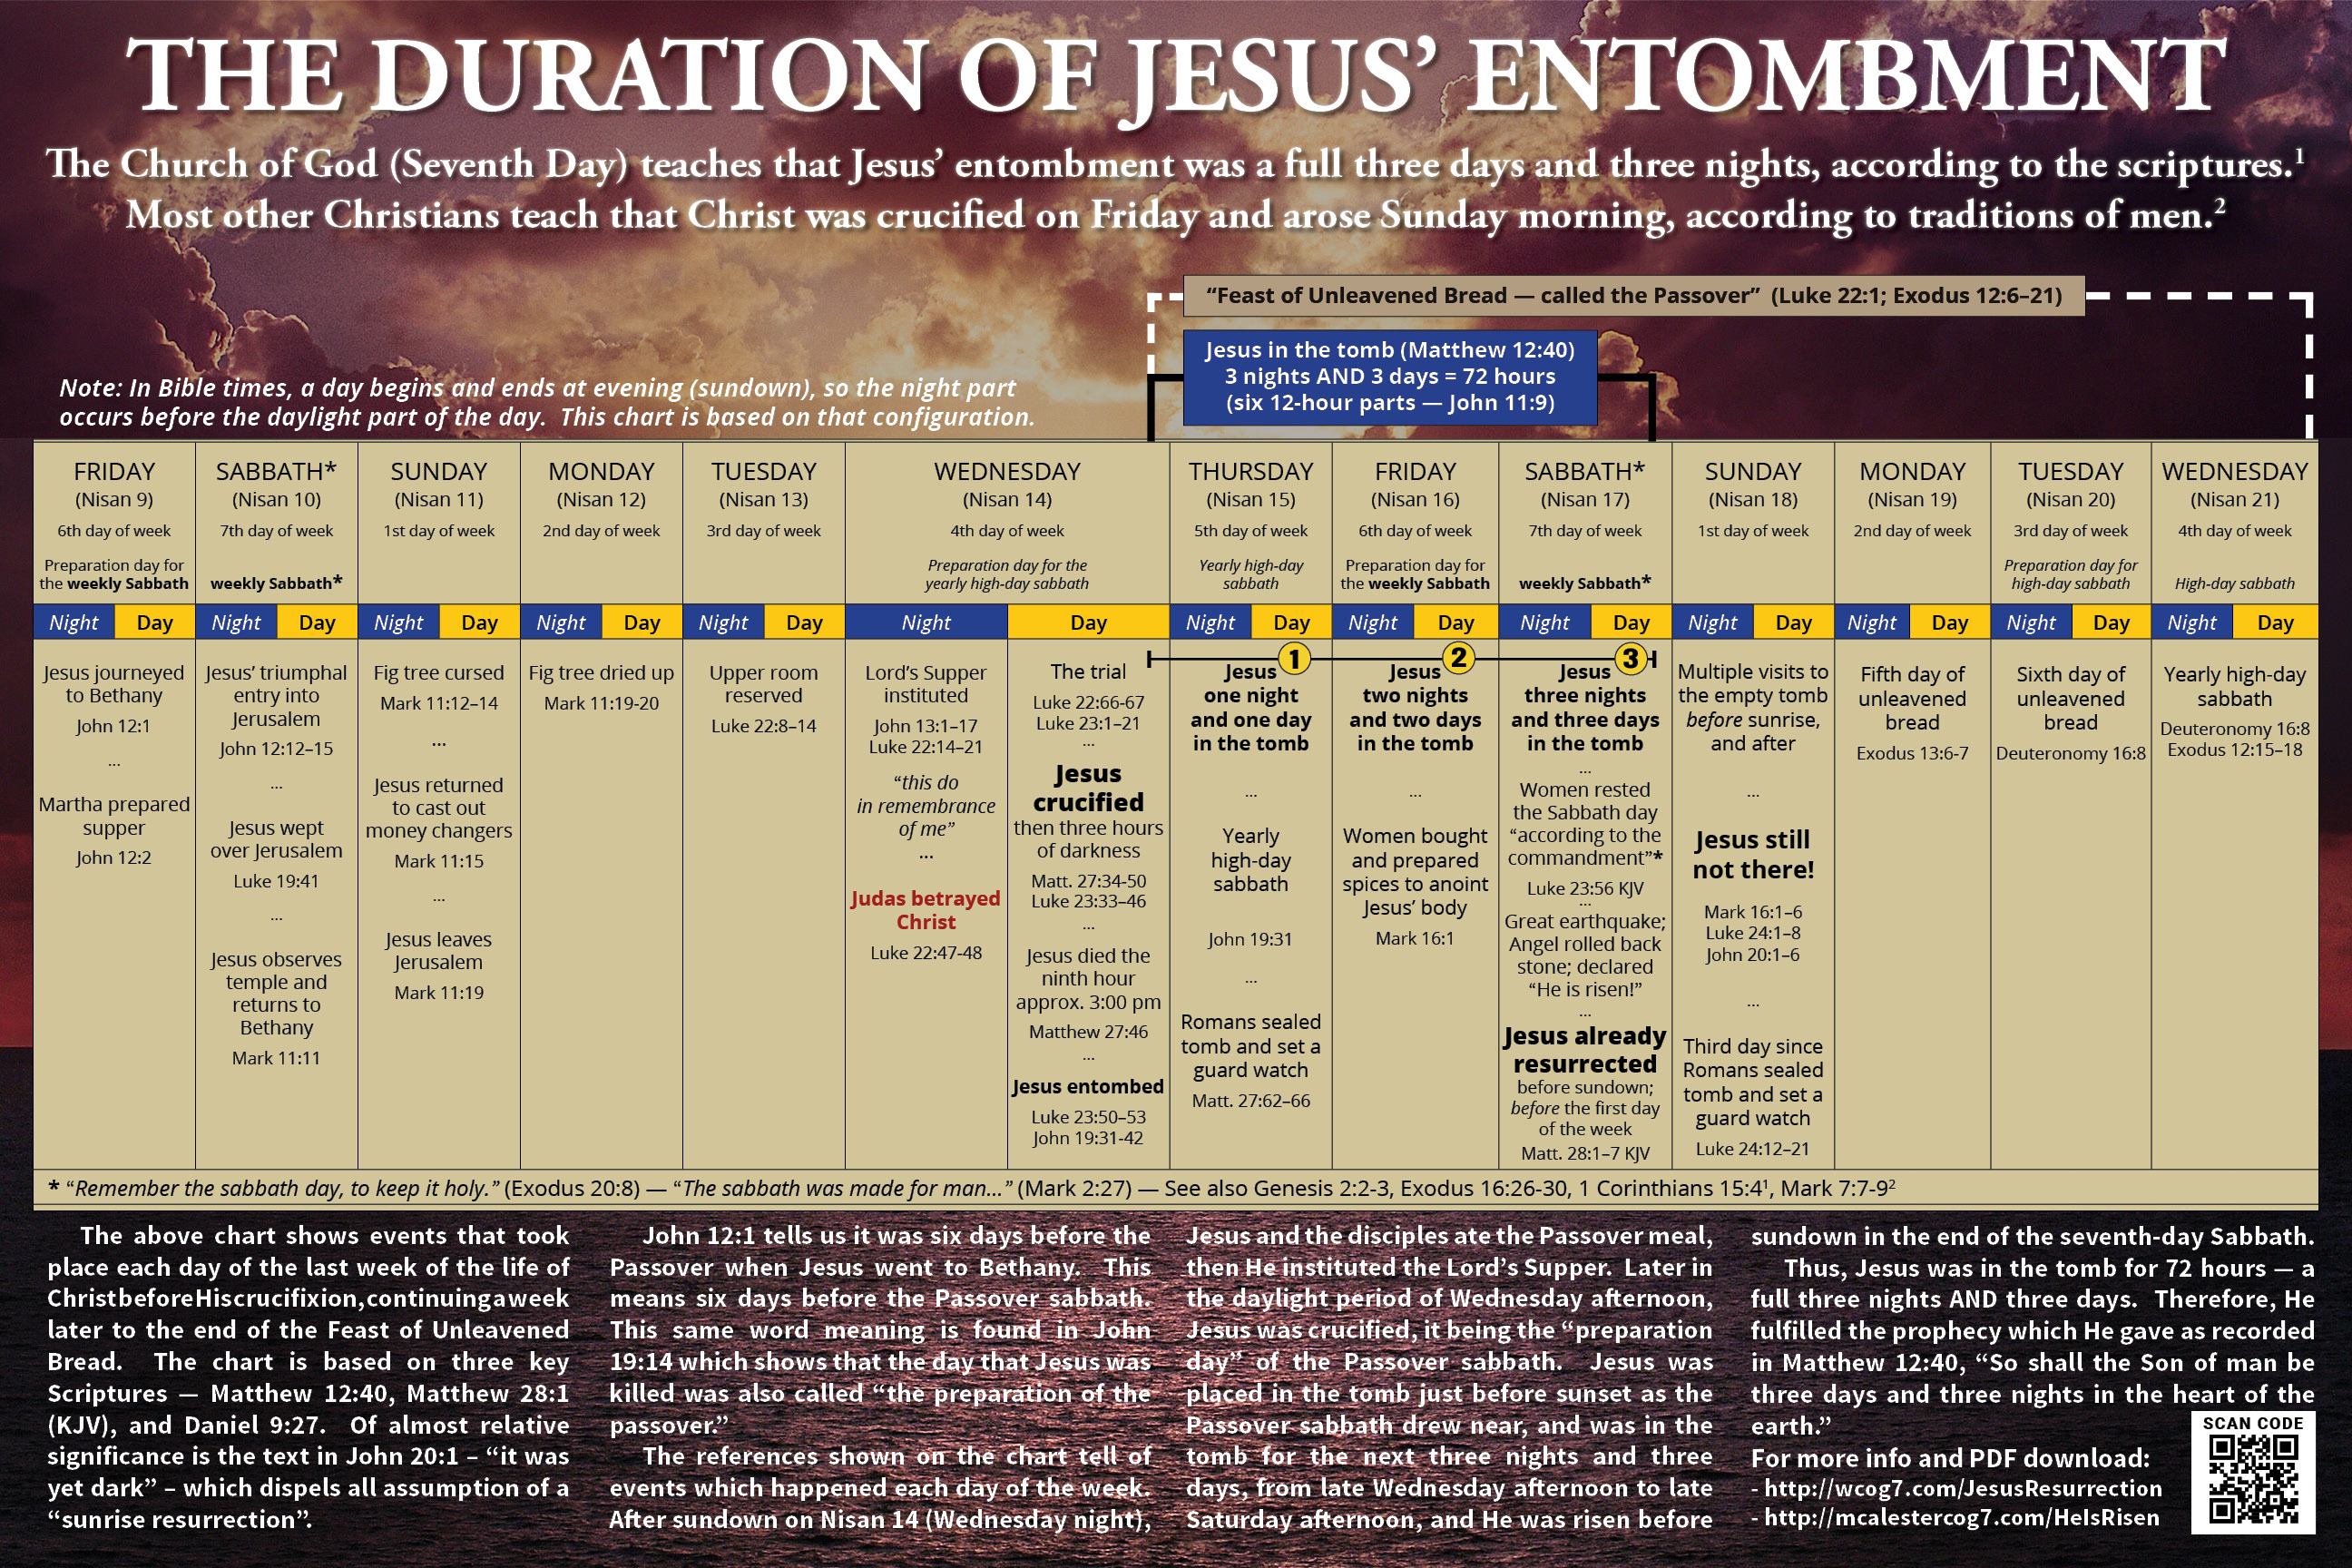 The Last Days of Jesus's Ministry According to The Harmonised Gospels ...